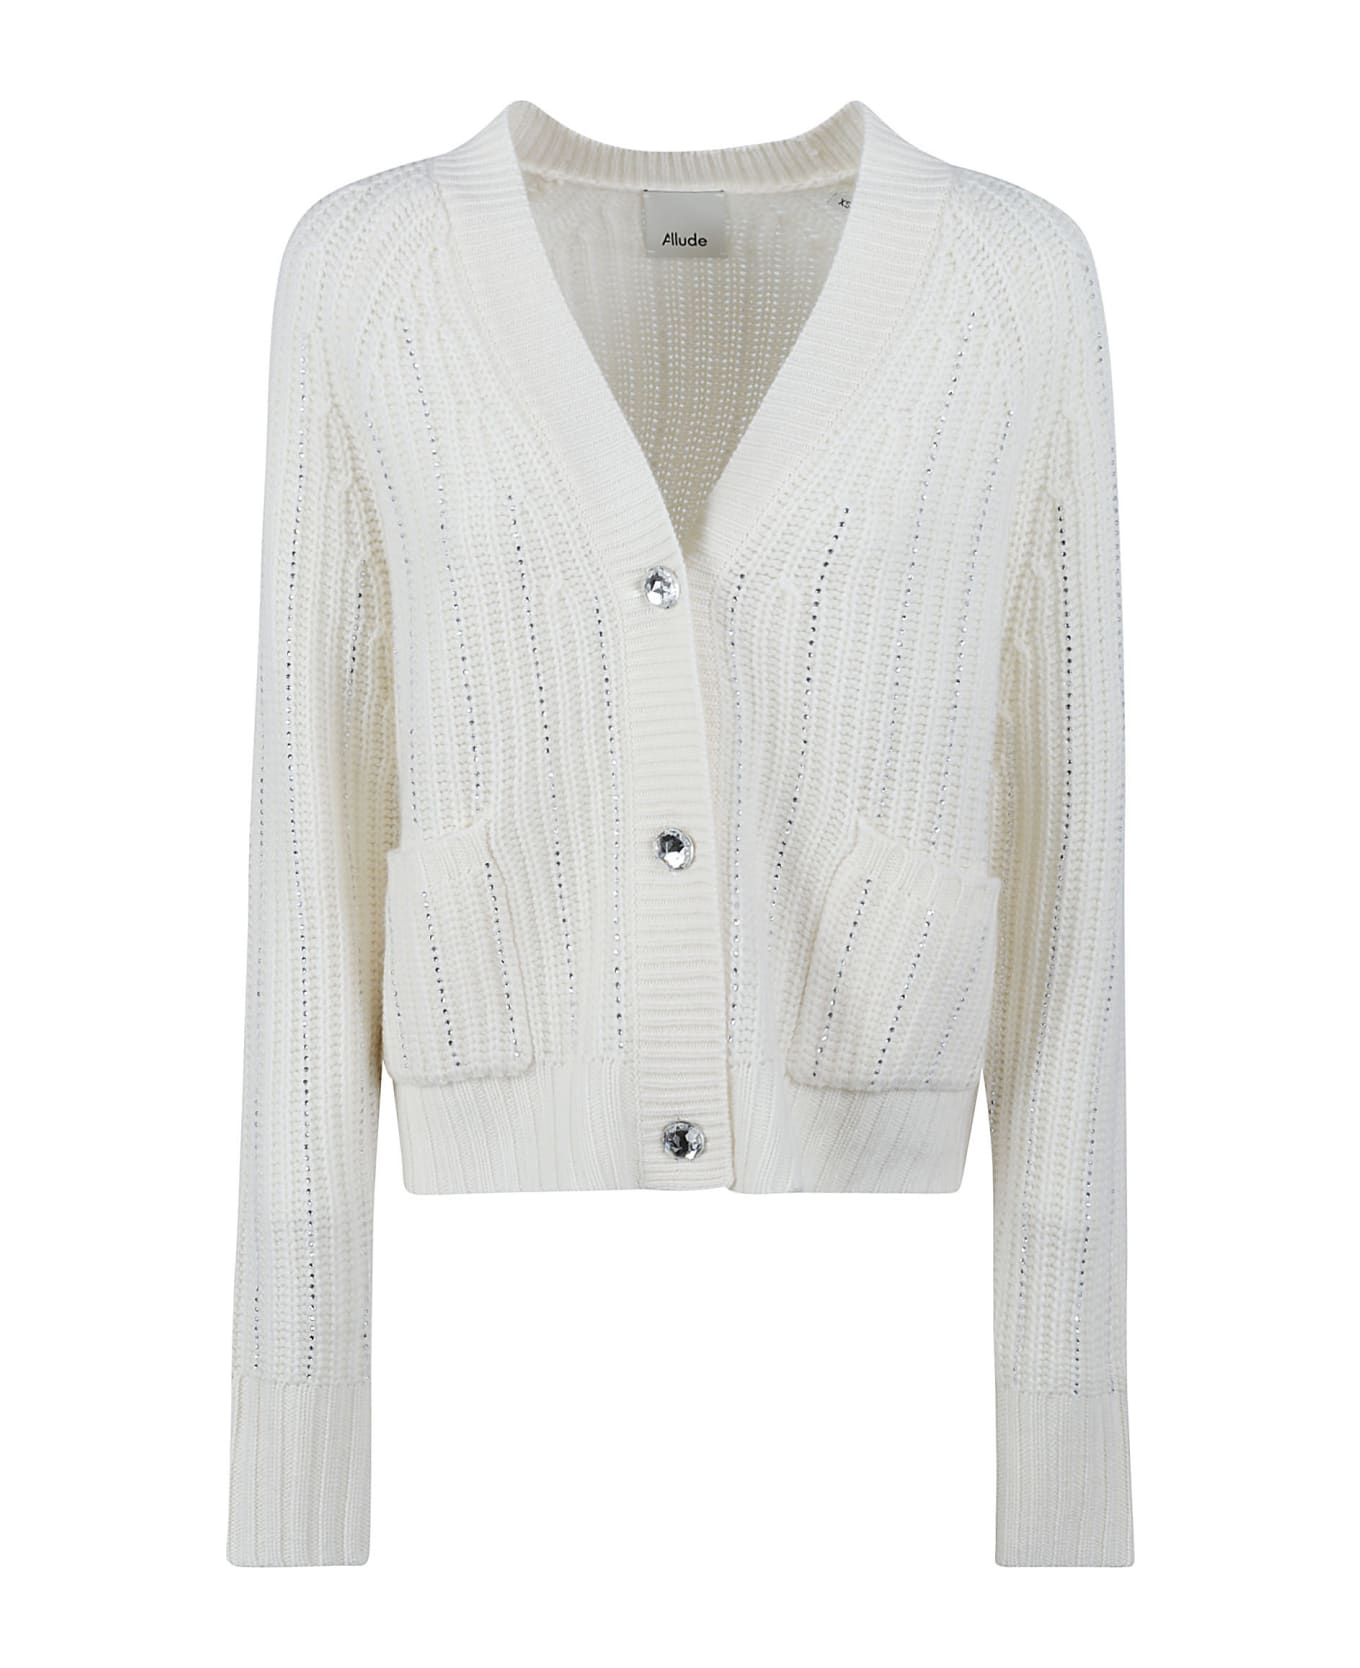 Allude Crystal Embellished Knit Cardigan - White